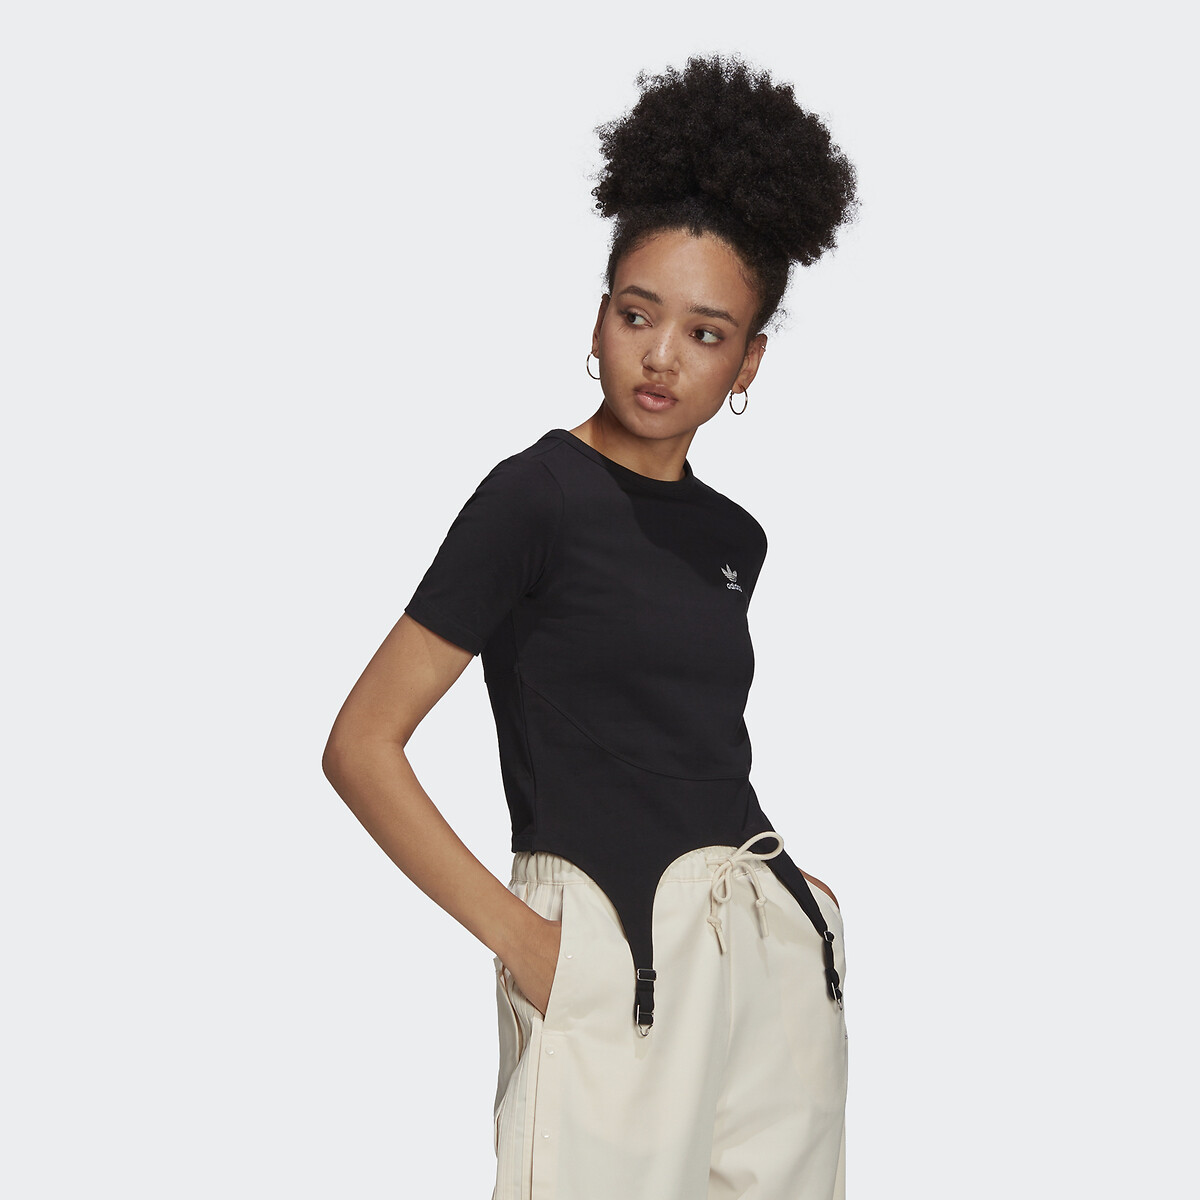 Cotton crop top with suspender detail, black, Adidas Originals